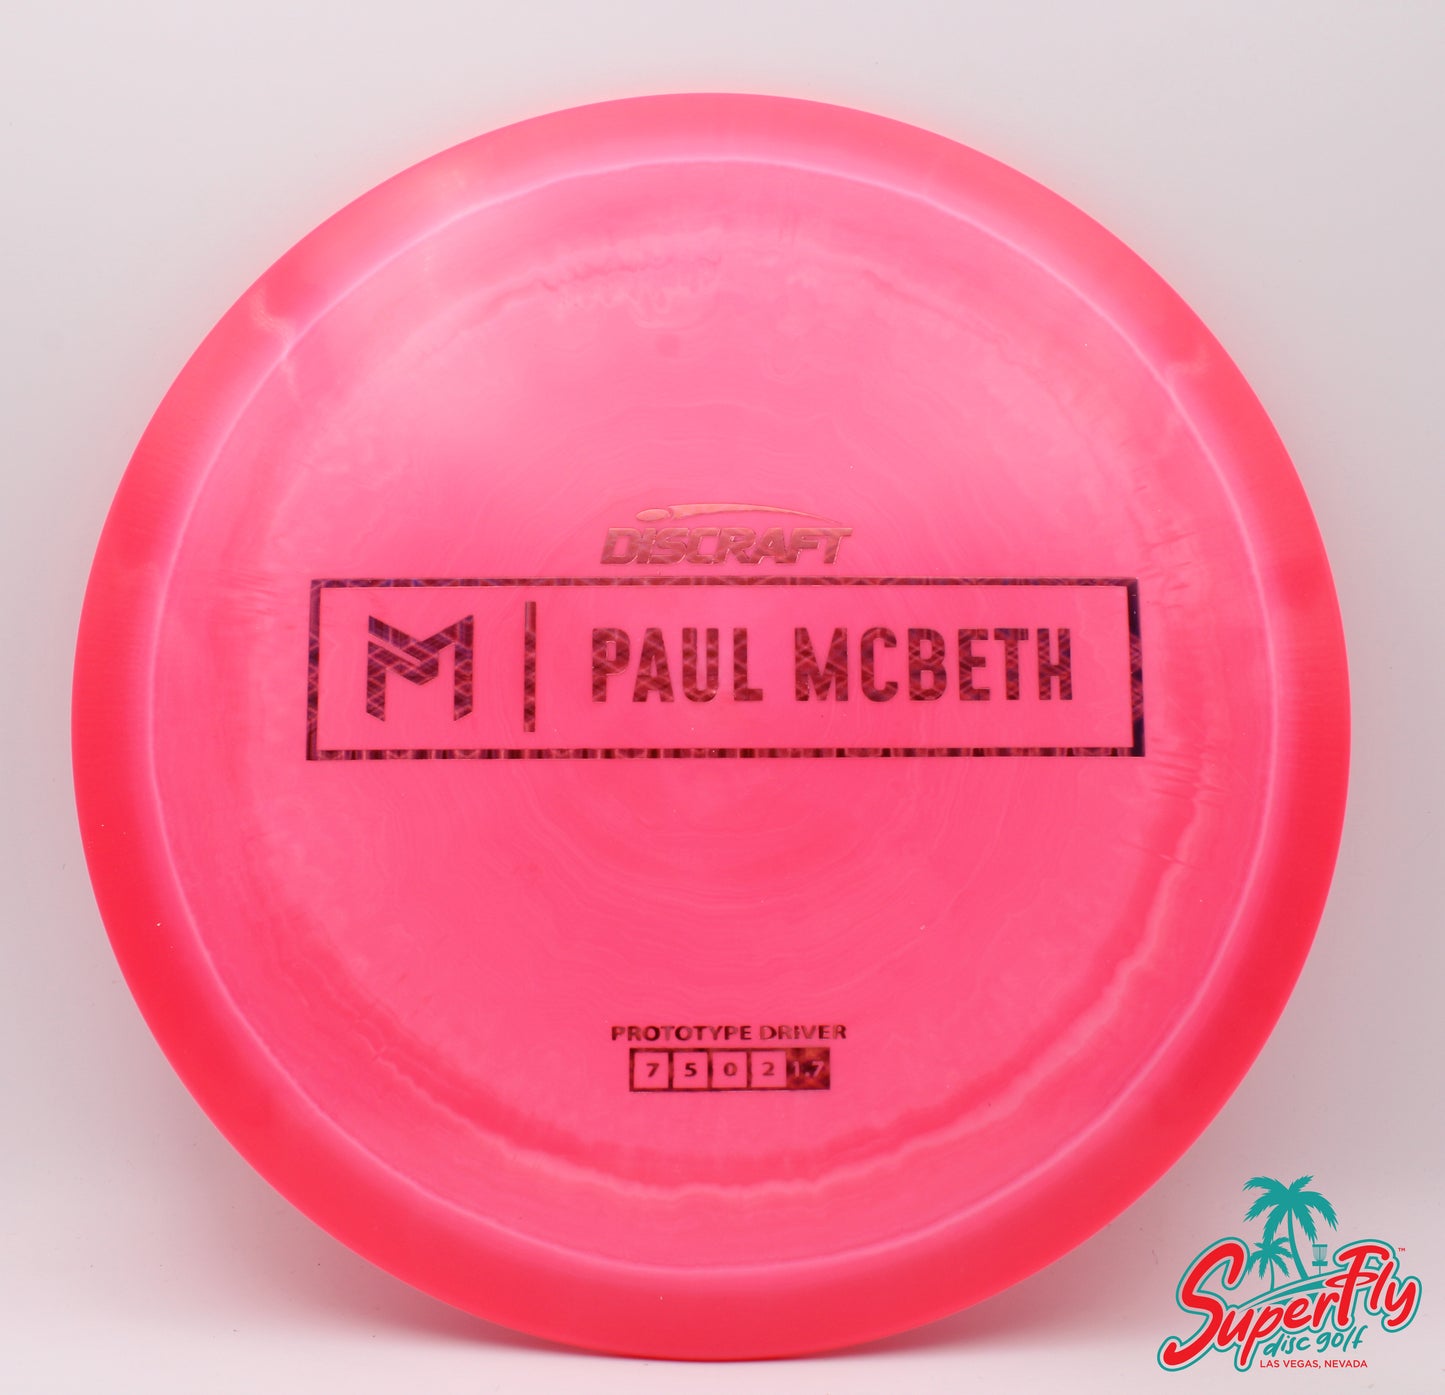 Discraft Paul McBeth Prototype ESP Athena (Limit 1 Per Person)